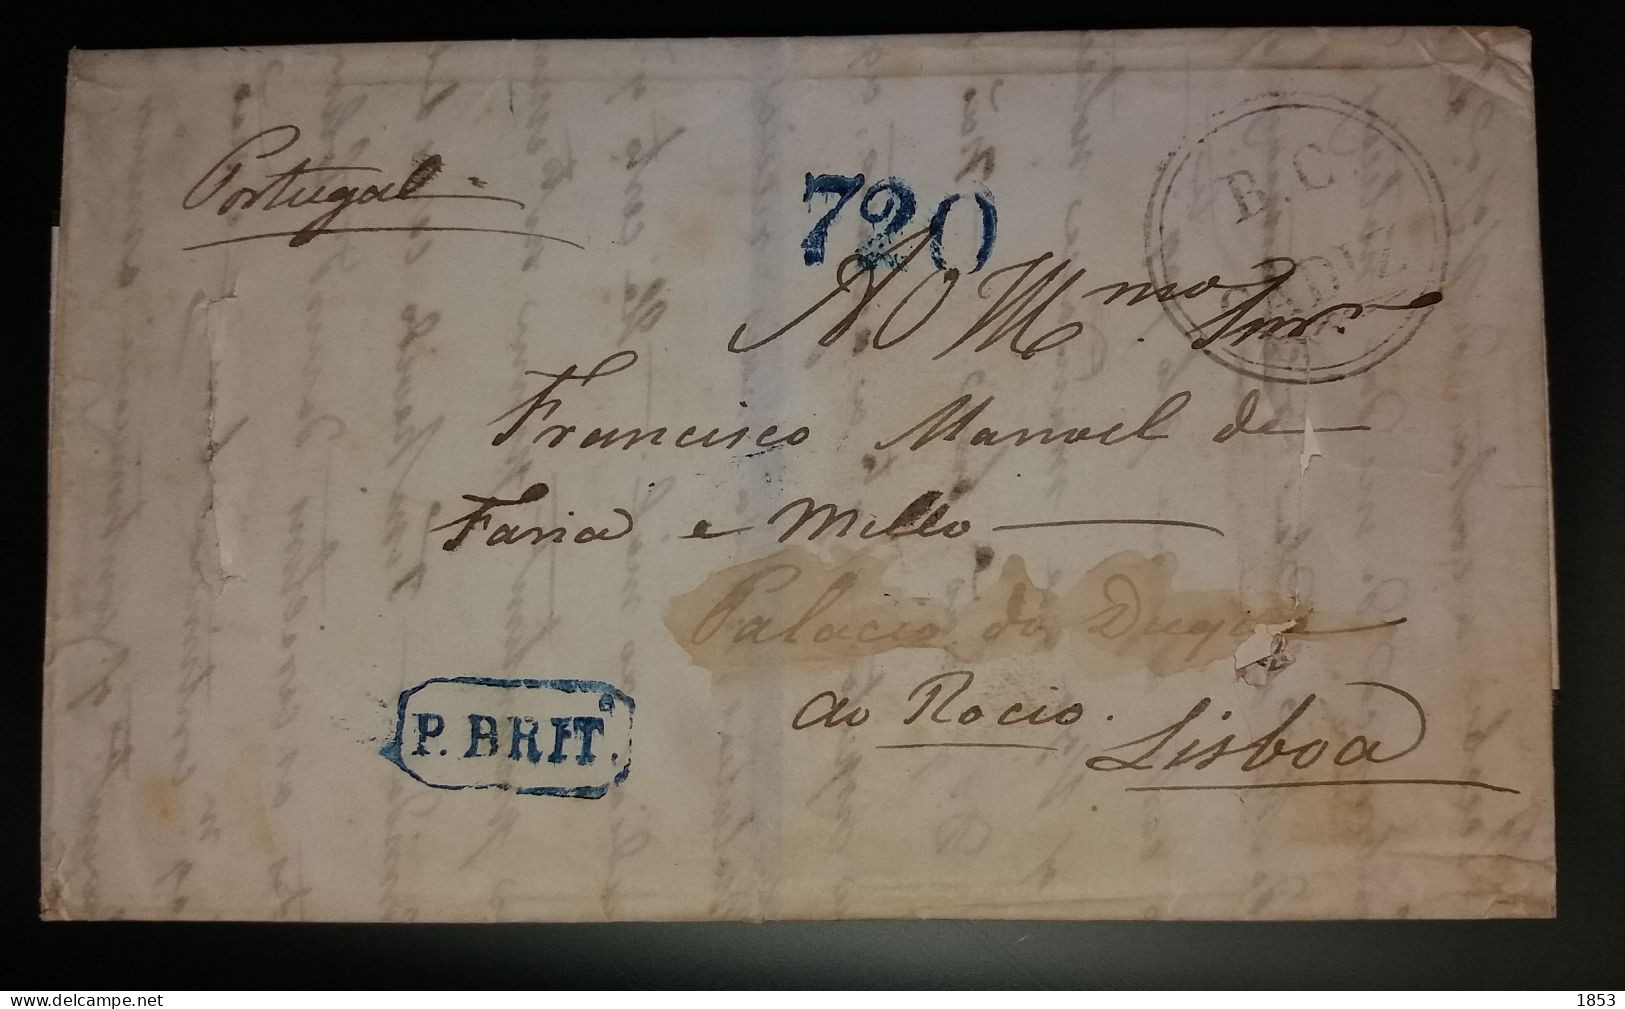 1854 - CORREIO MARITIMO - PAQUETE BRITANICO - B.C CADIZ - CORTES DE DESINFECTAÇÂO - Covers & Documents